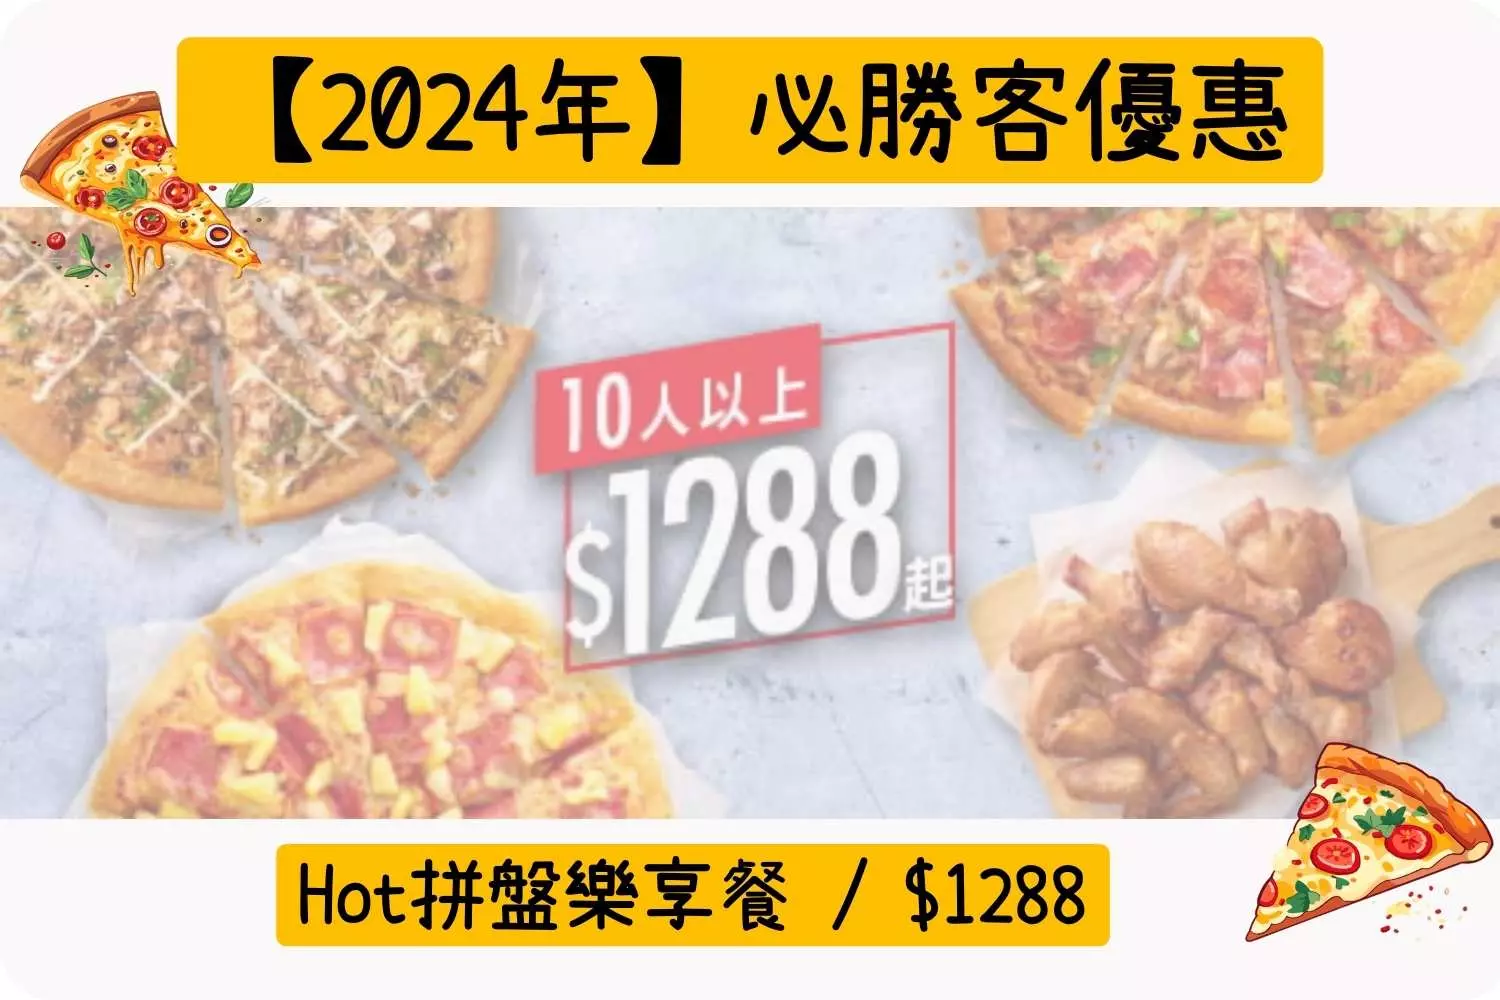 Hot拼盤樂享餐 / $1288